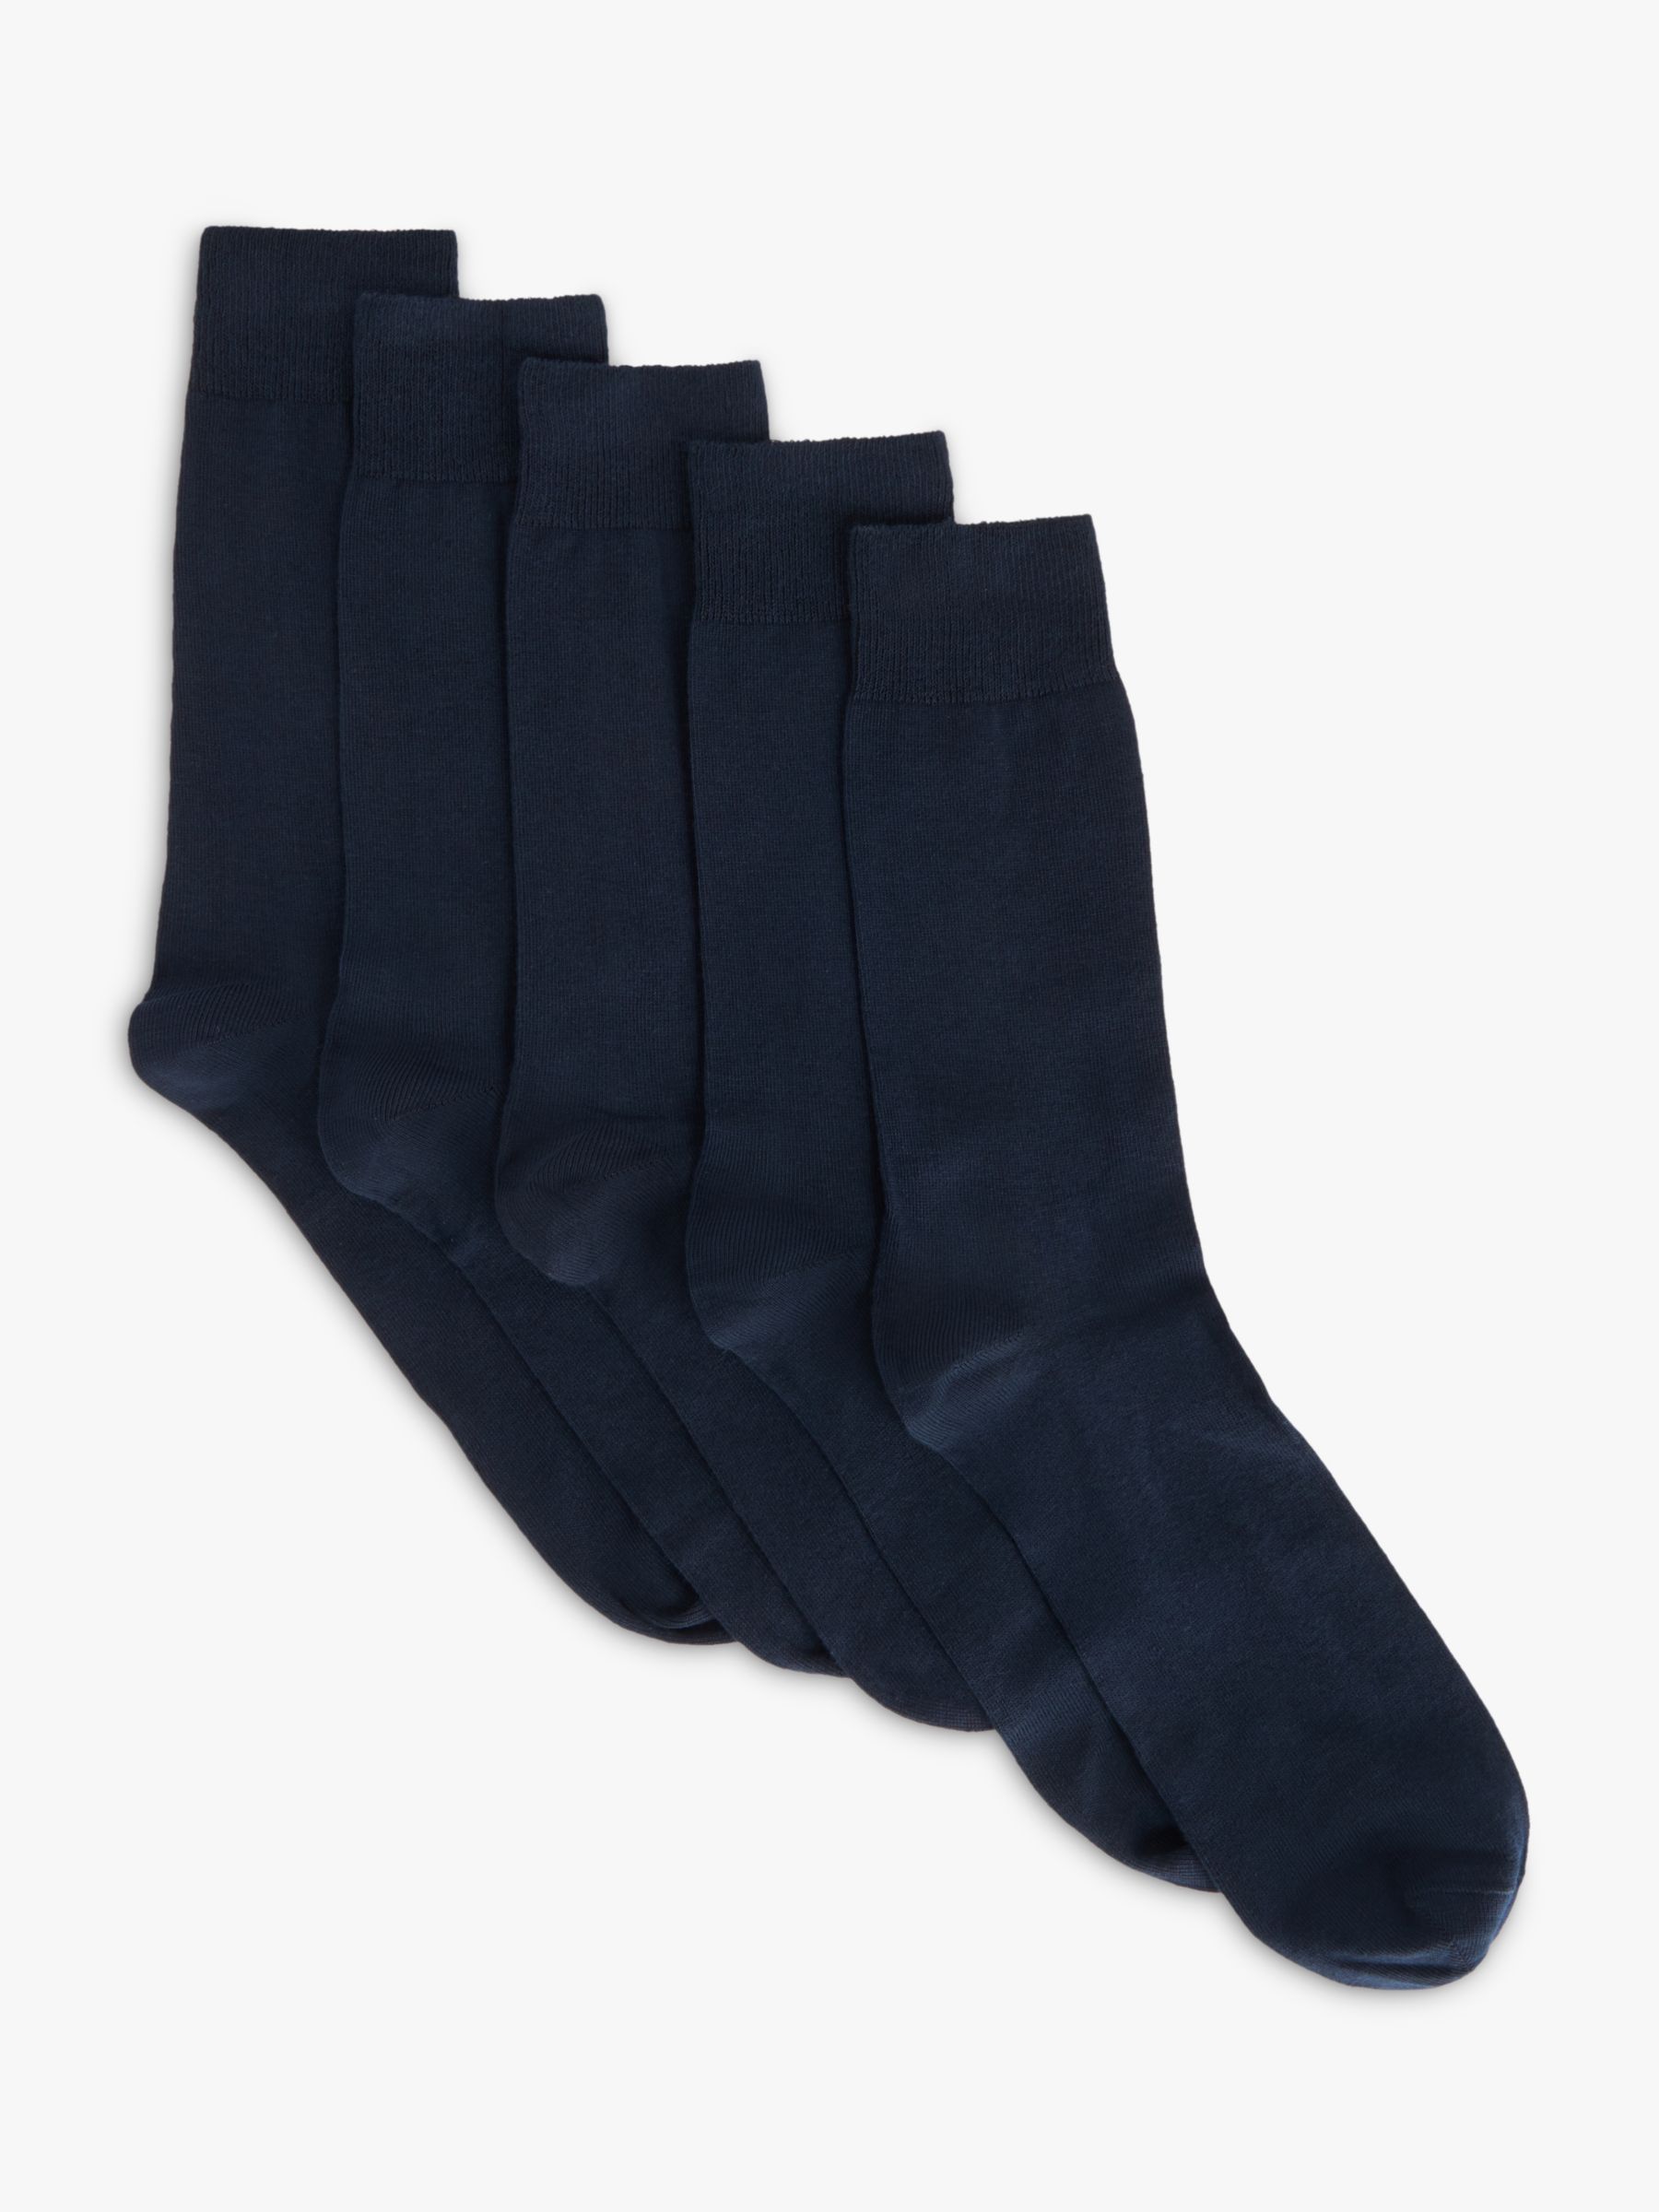 Buy John Lewis ANYDAY Cotton Rich Plain Men's Socks, Pack of 5 Online at johnlewis.com